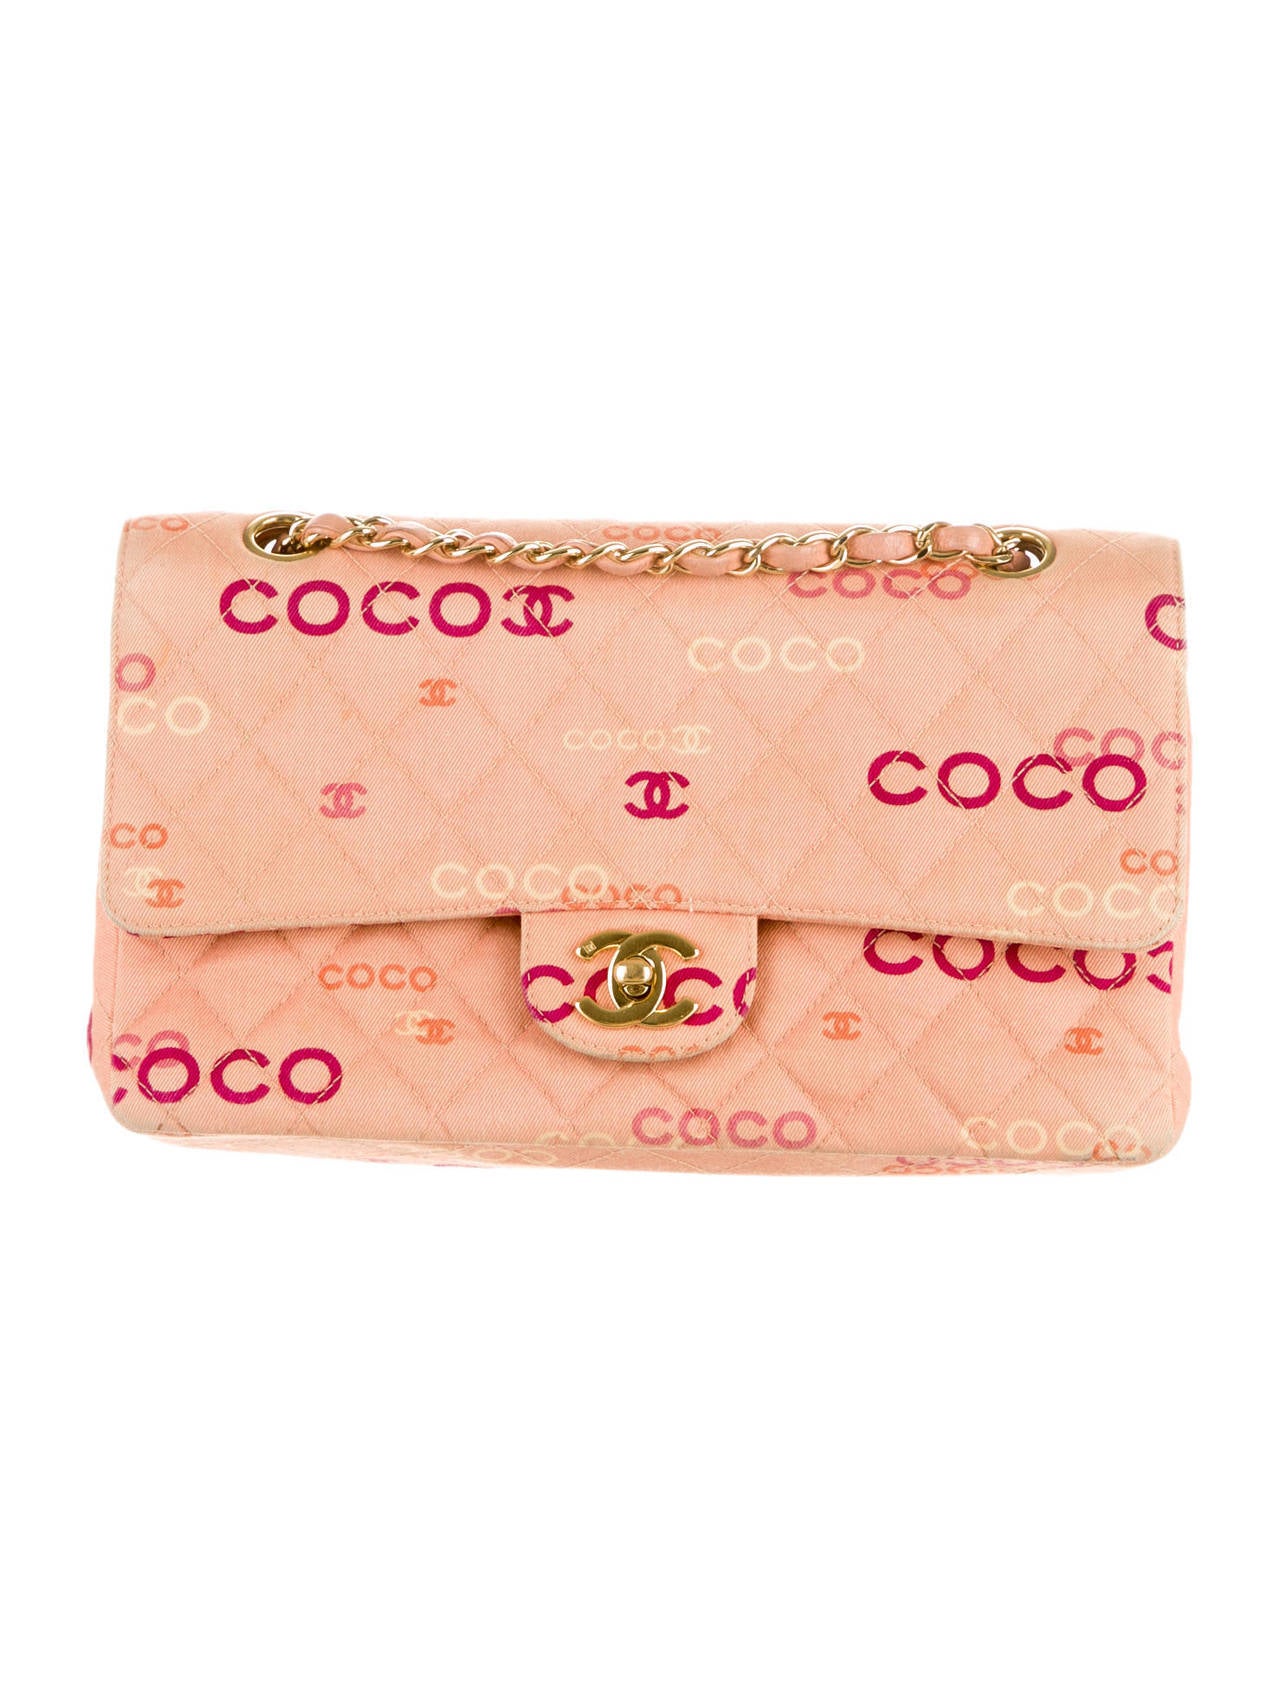 2002 Chanel classic medium coco logo pink canvas bag at 1stdibs